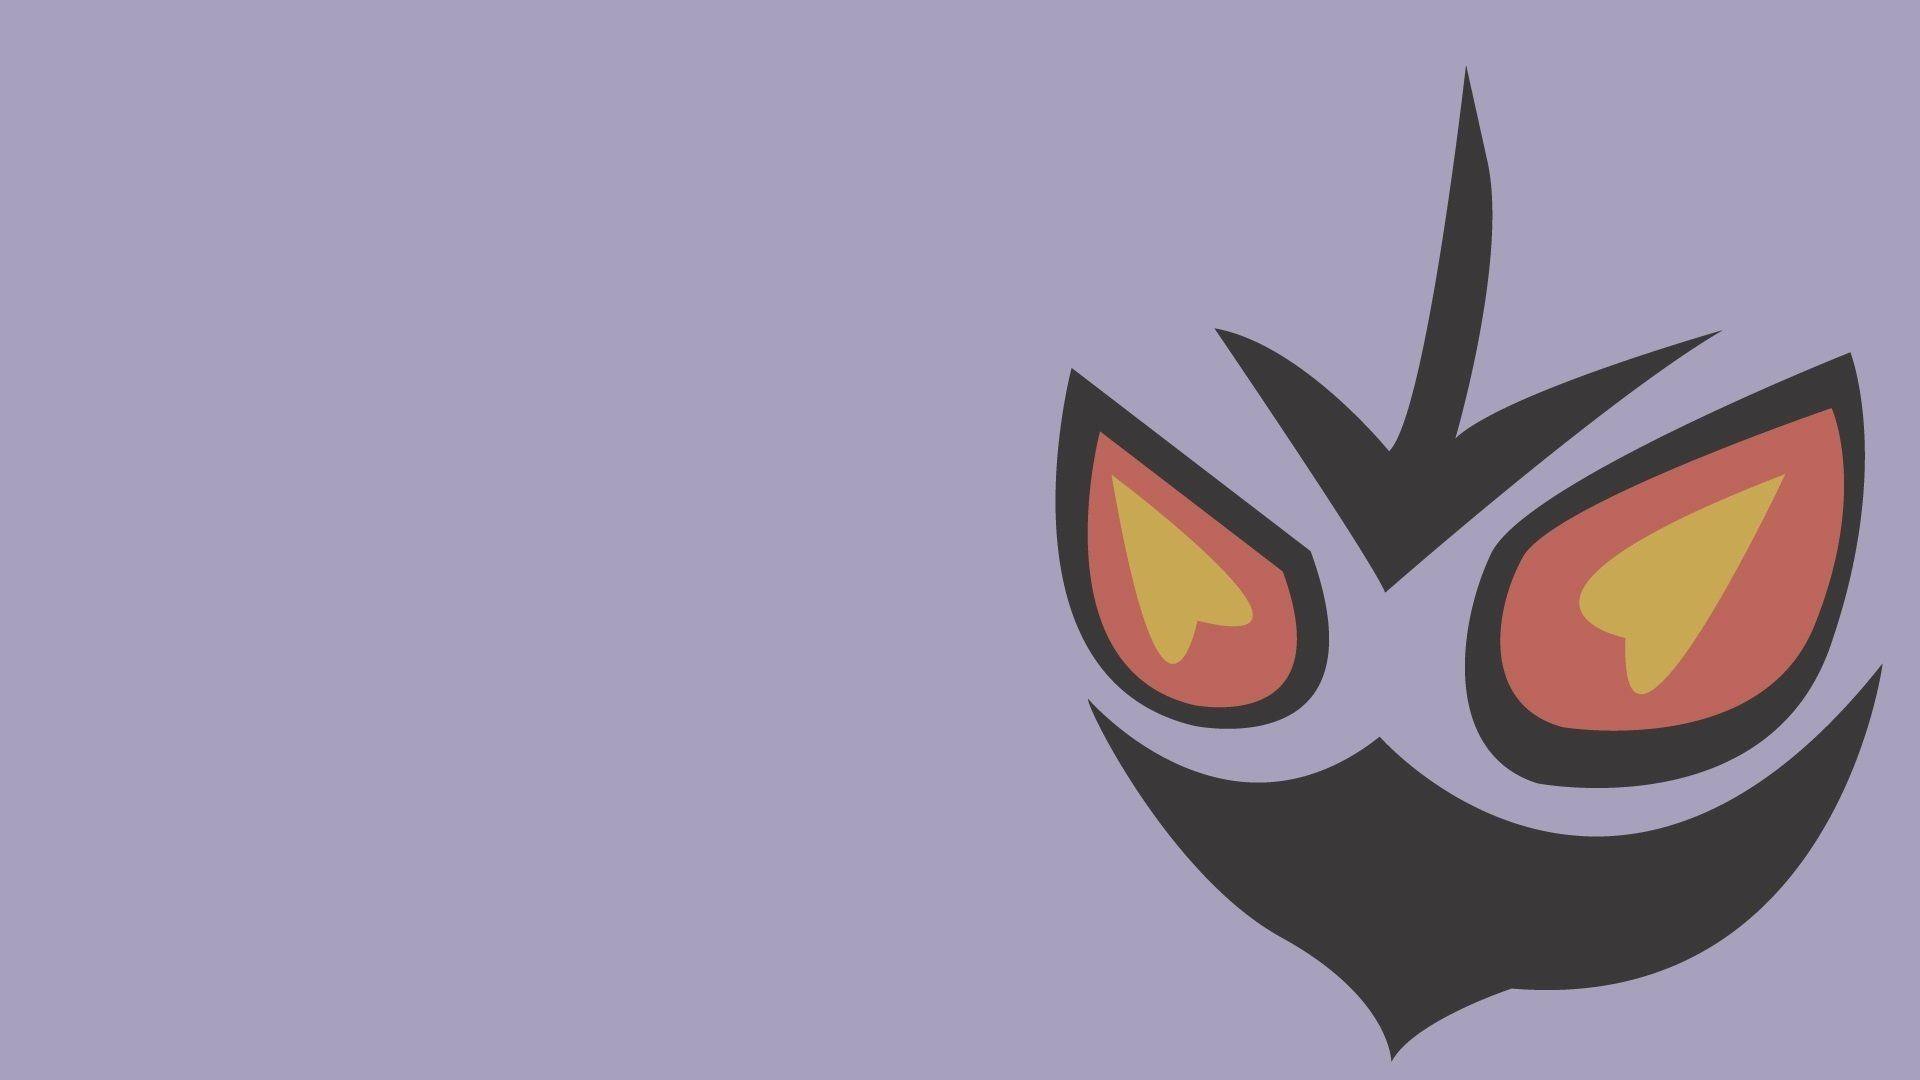 Arbok (Pokémon) HD Wallpaper and Background Image